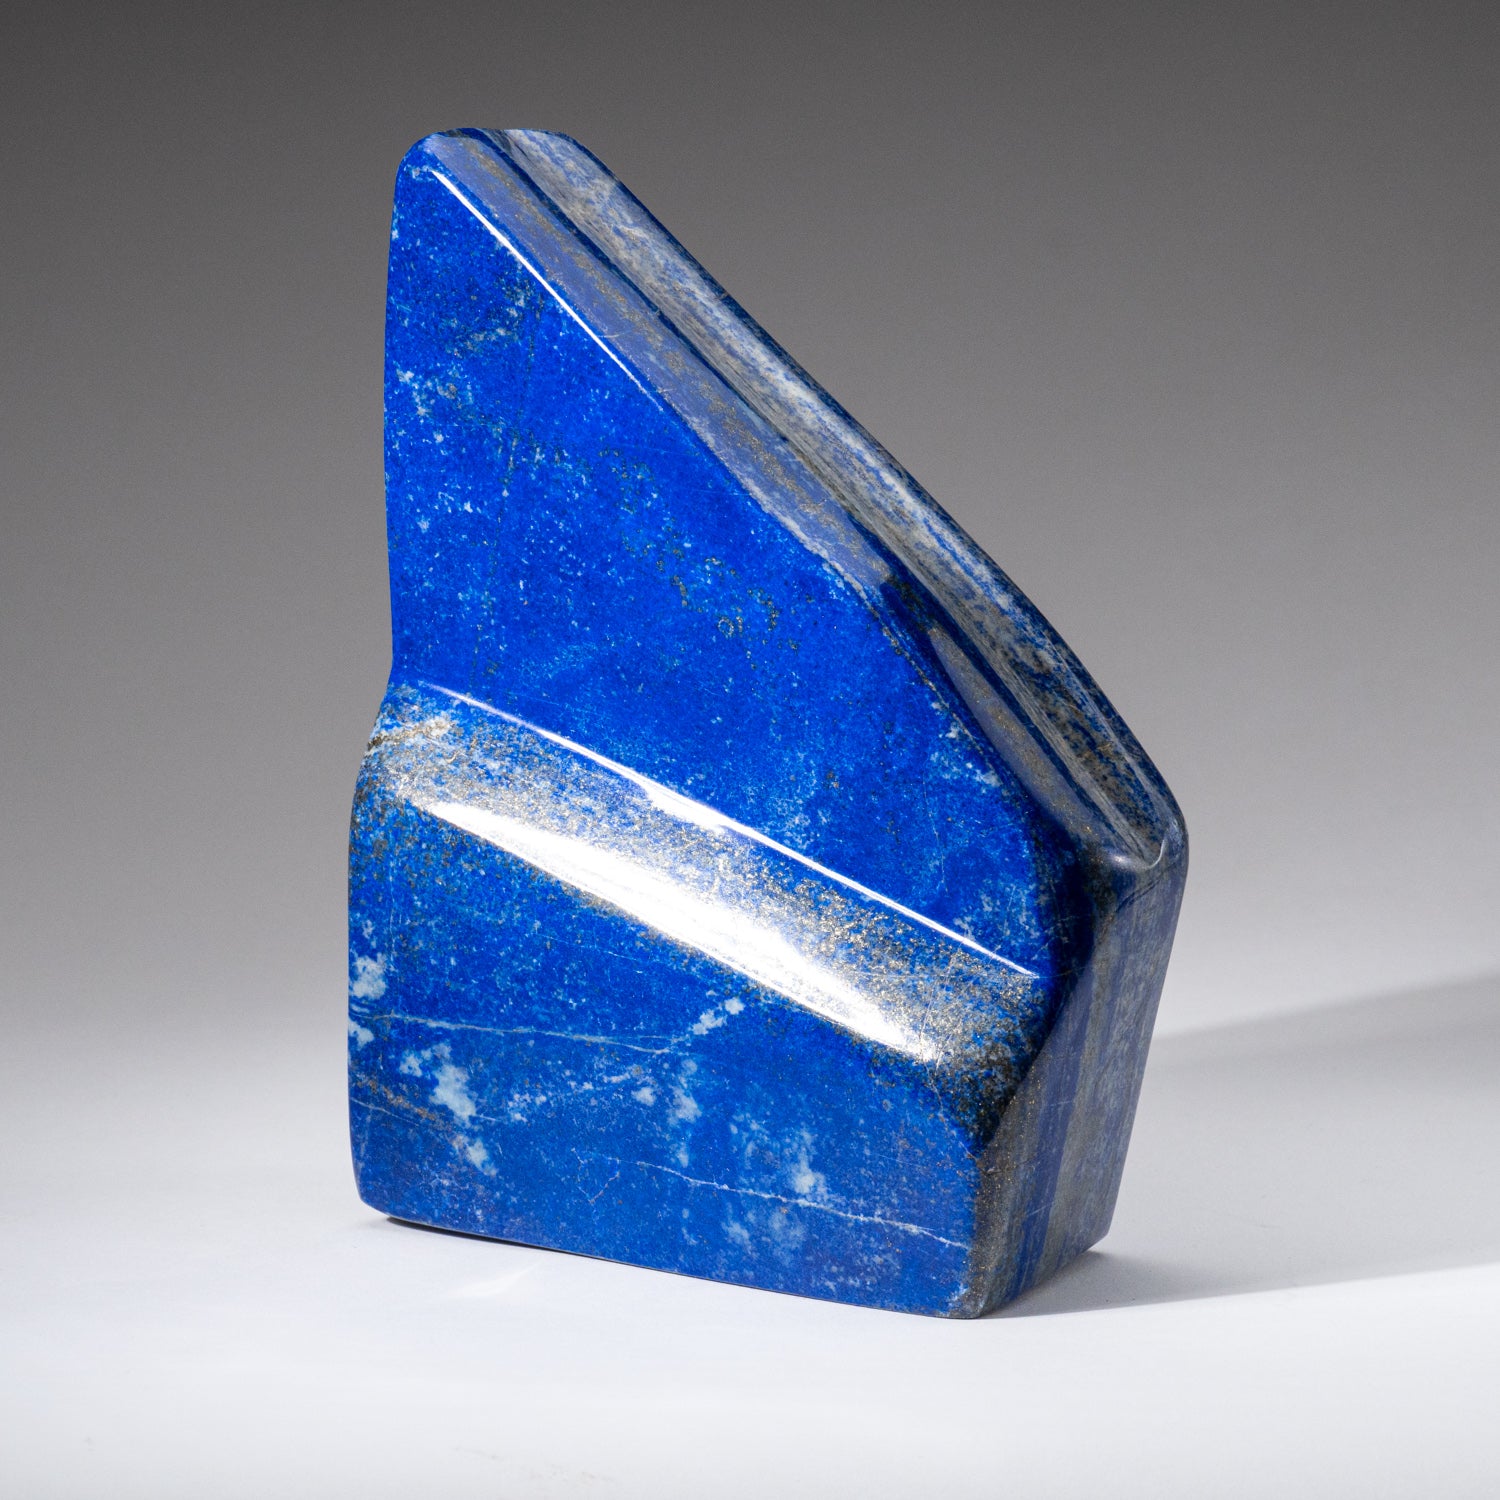 Polished Lapis Lazuli Freeform from Afghanistan (6.8 lbs)